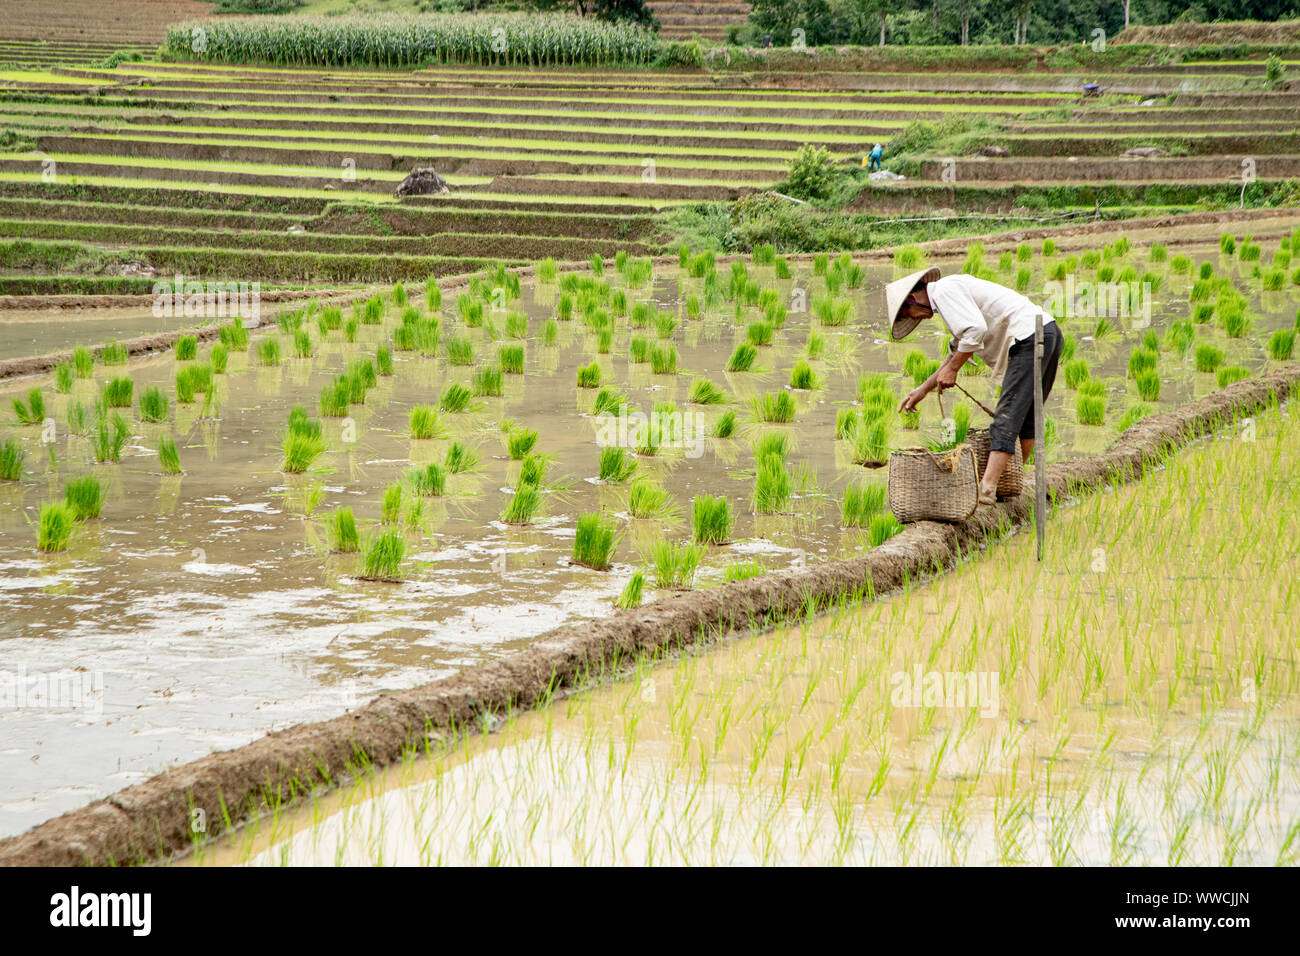 Vietnamese man transplanting rice Stock Photo